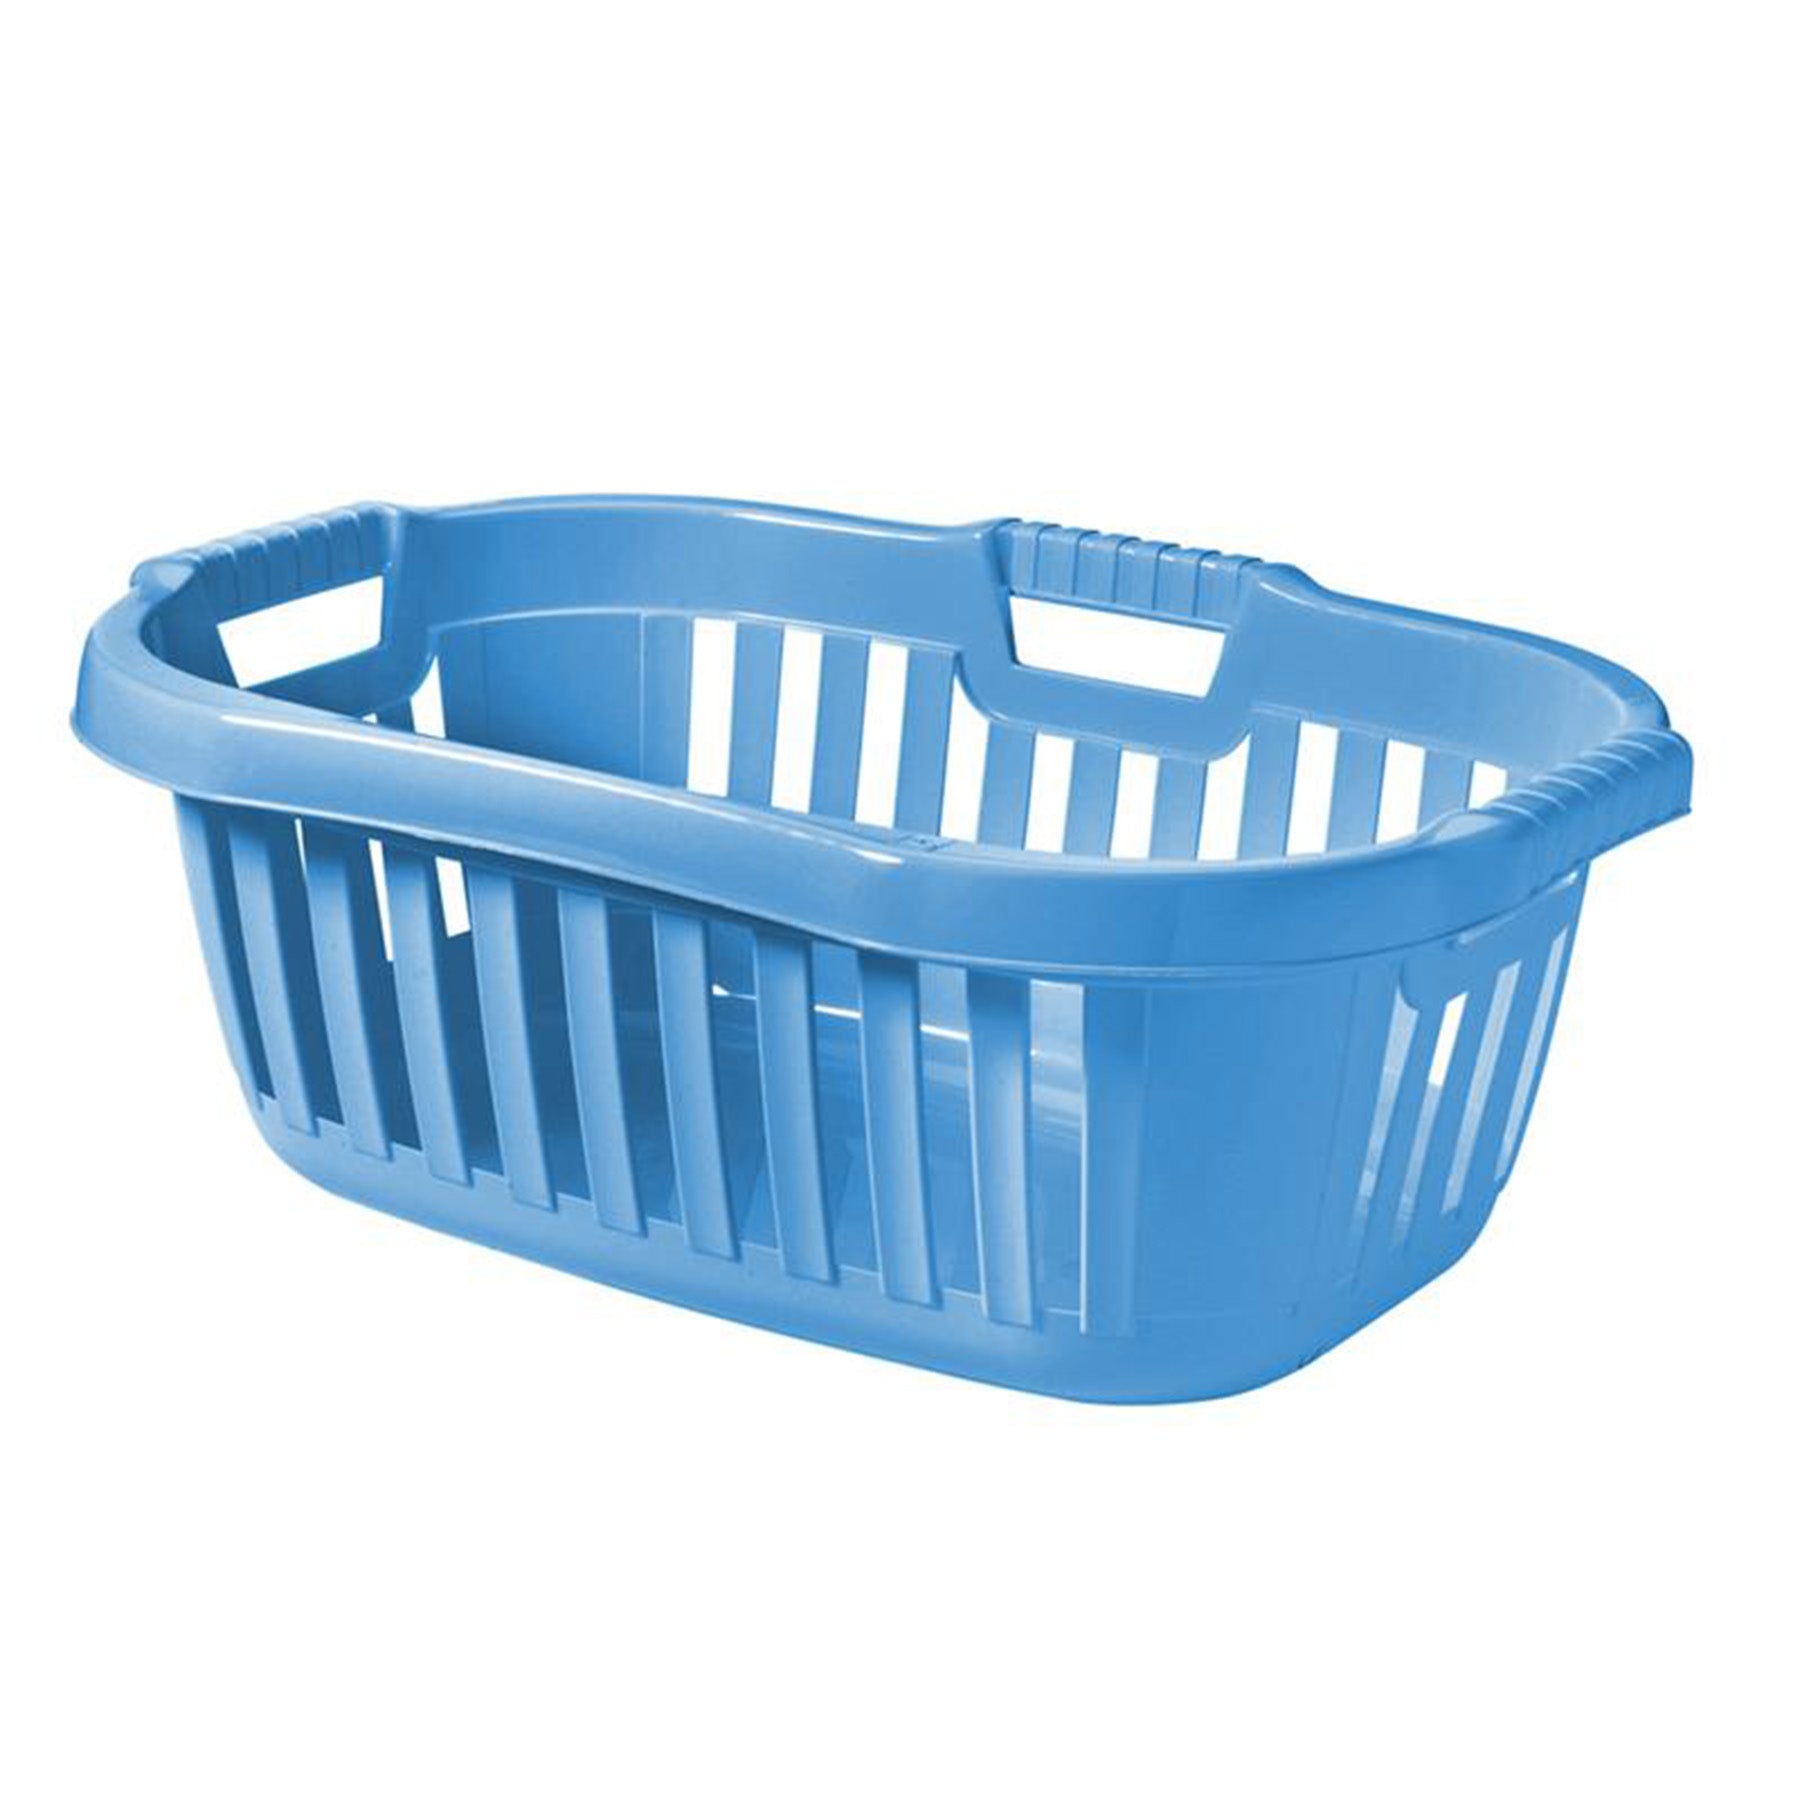 Laundry basket Capacity: 50 Liters